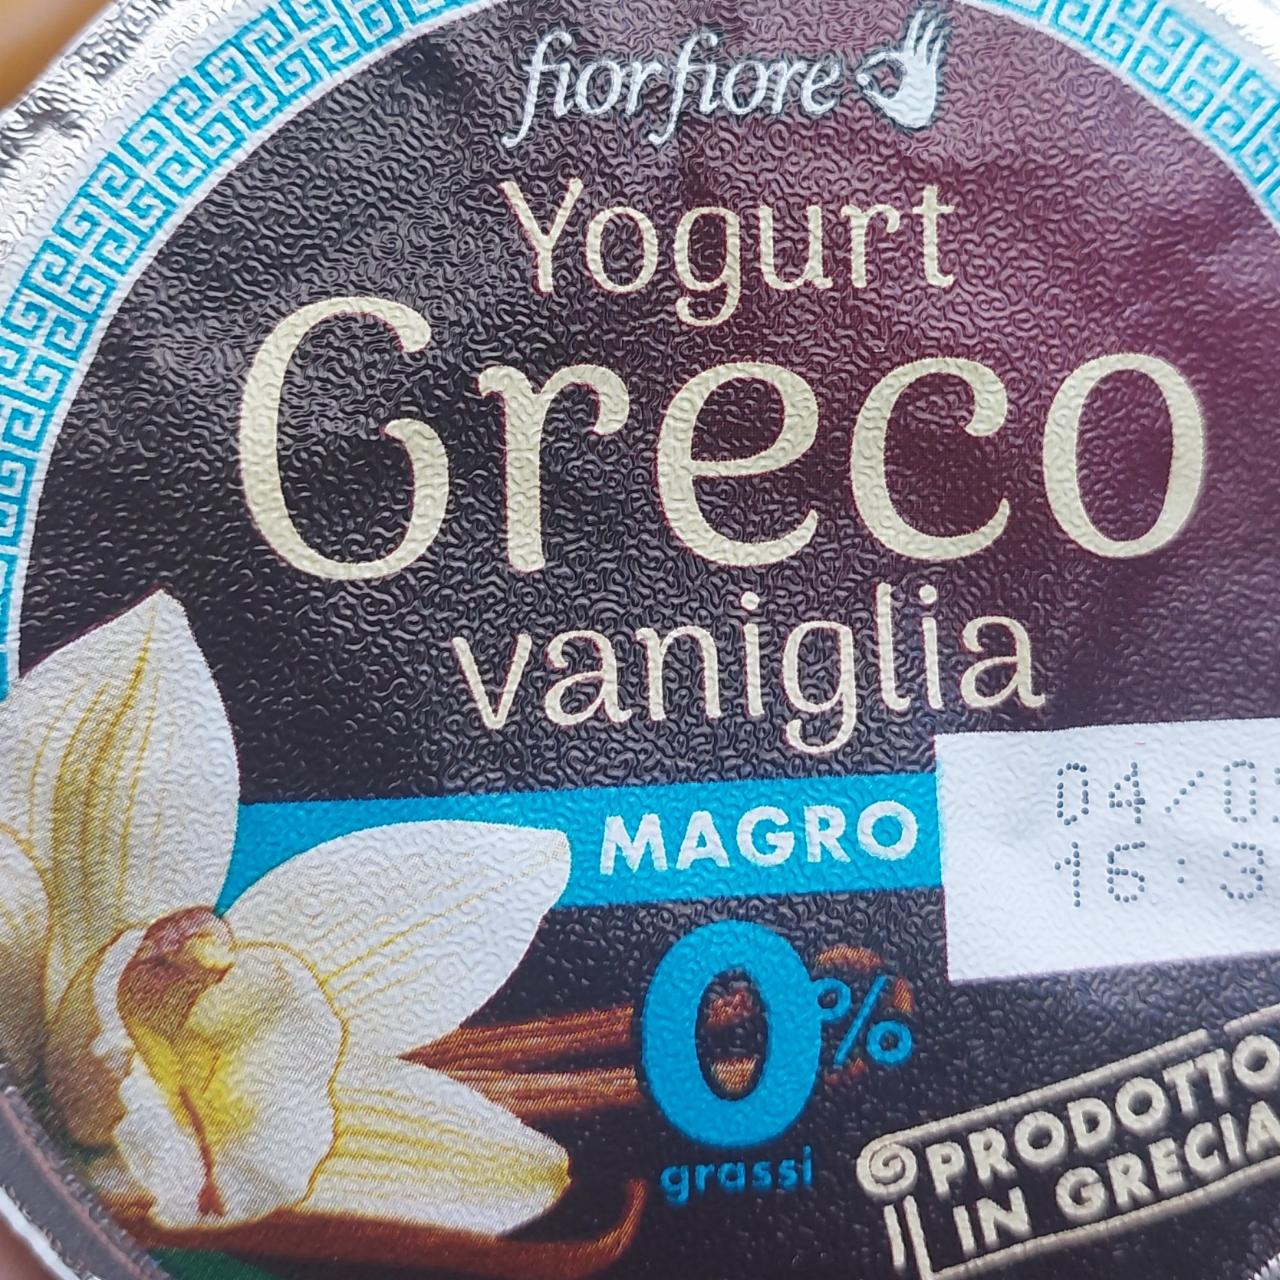 Fotografie - Yogurt Greco vaniglia 0% Magro